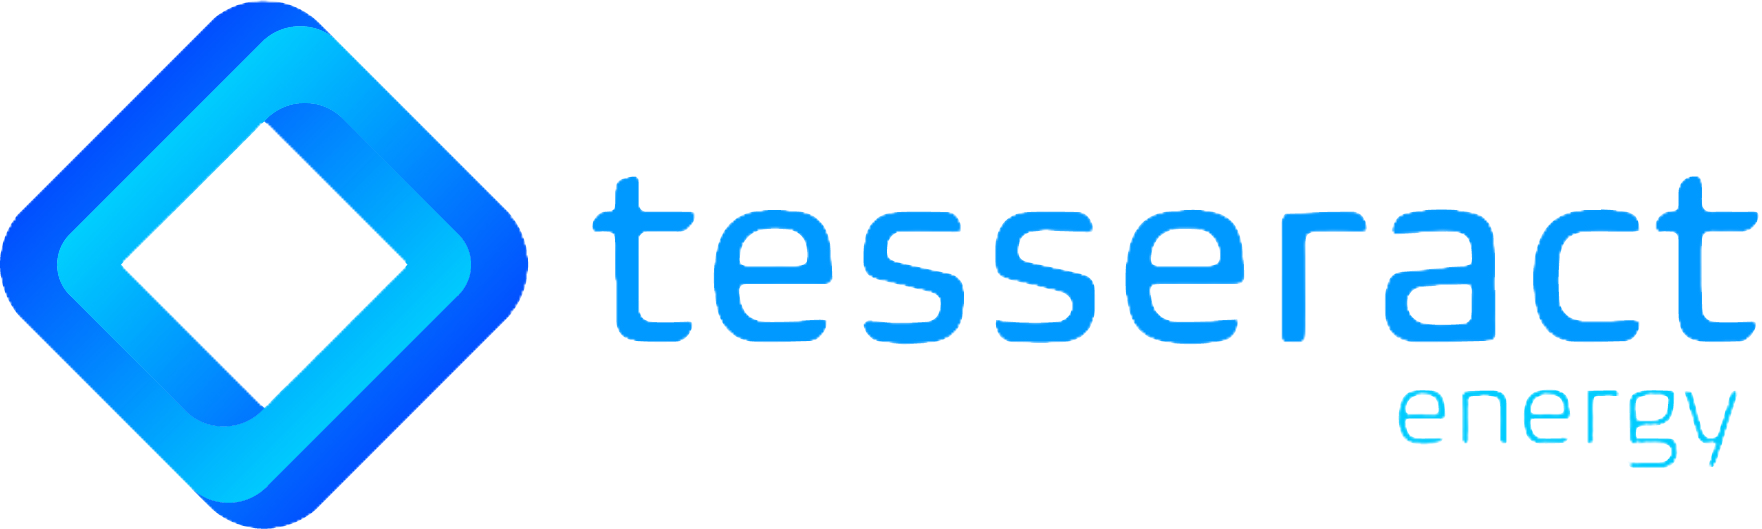 tesseract